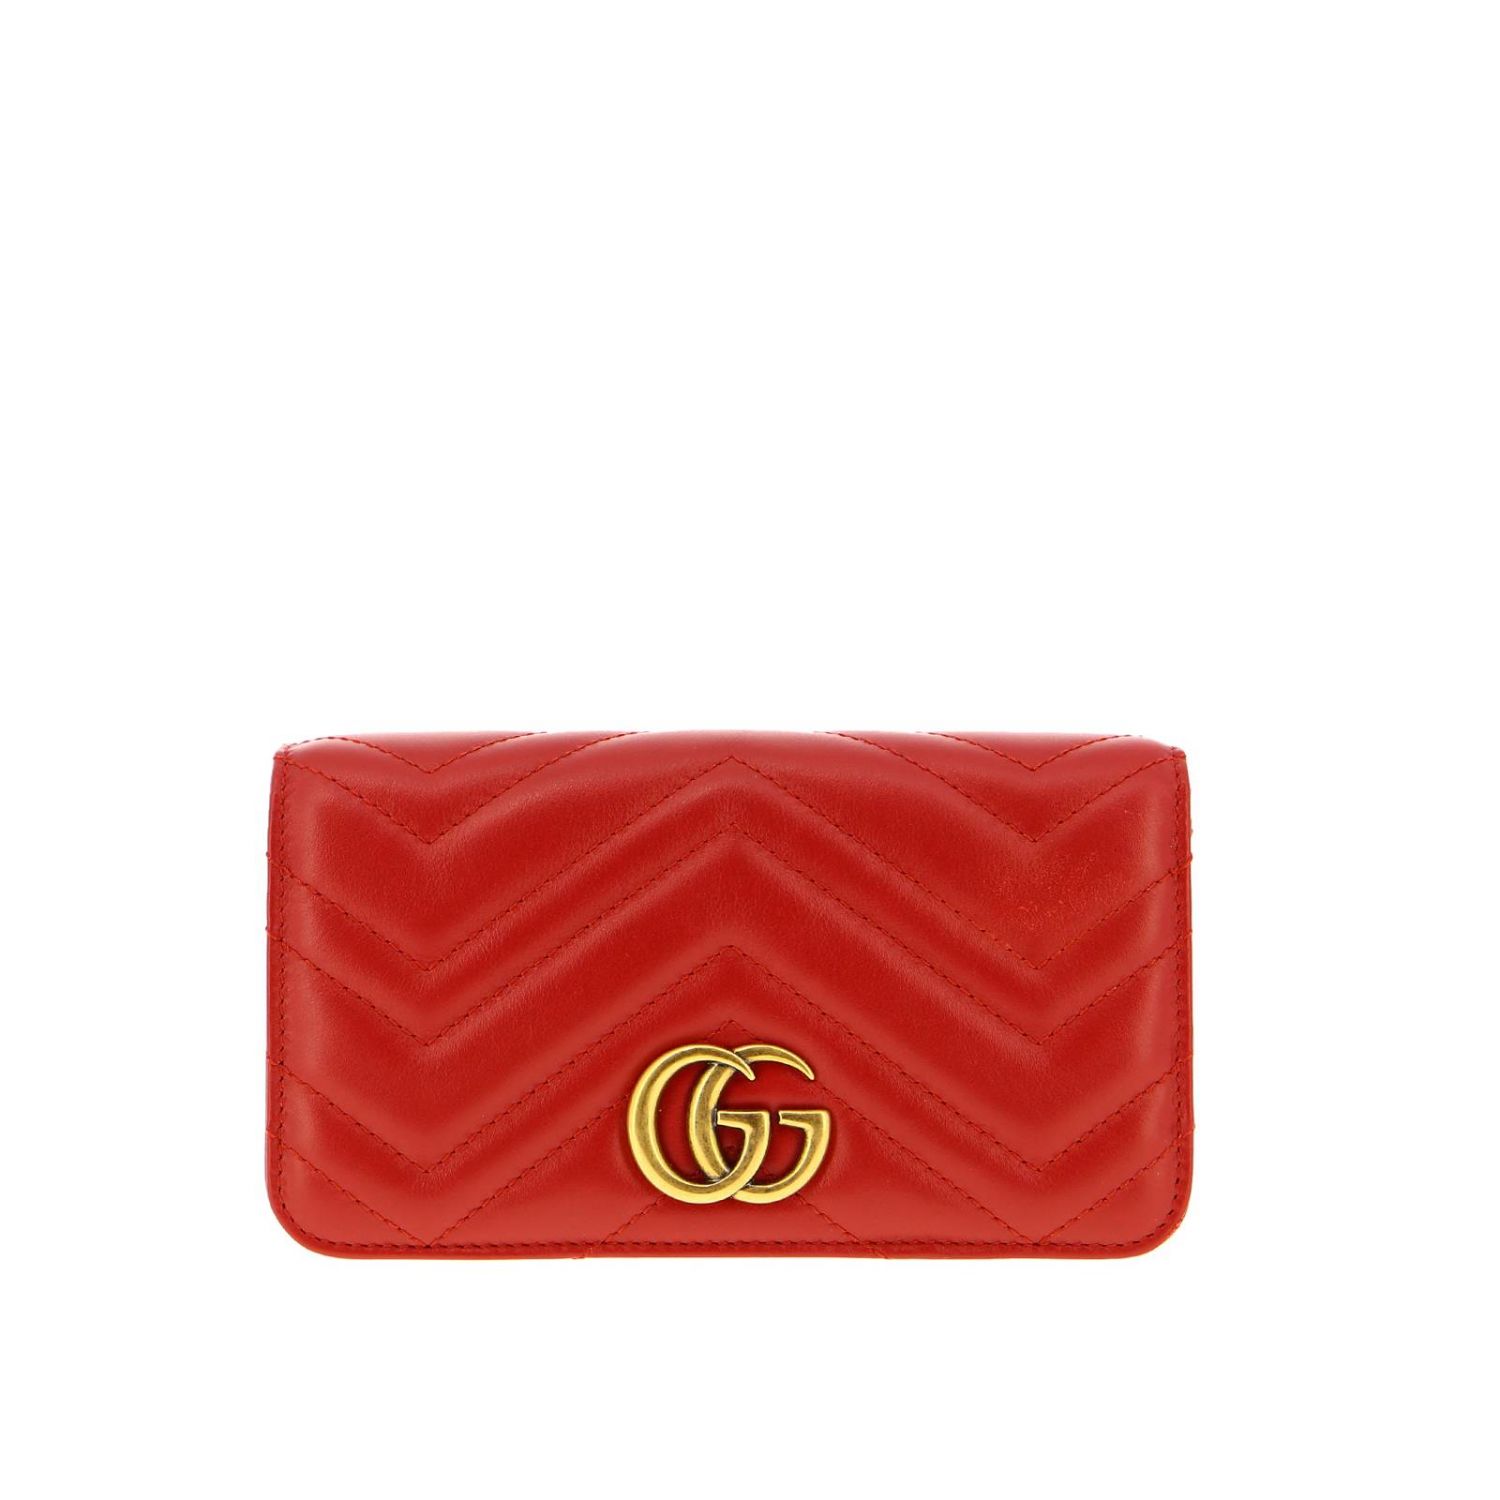 gucci genuine leather handbags